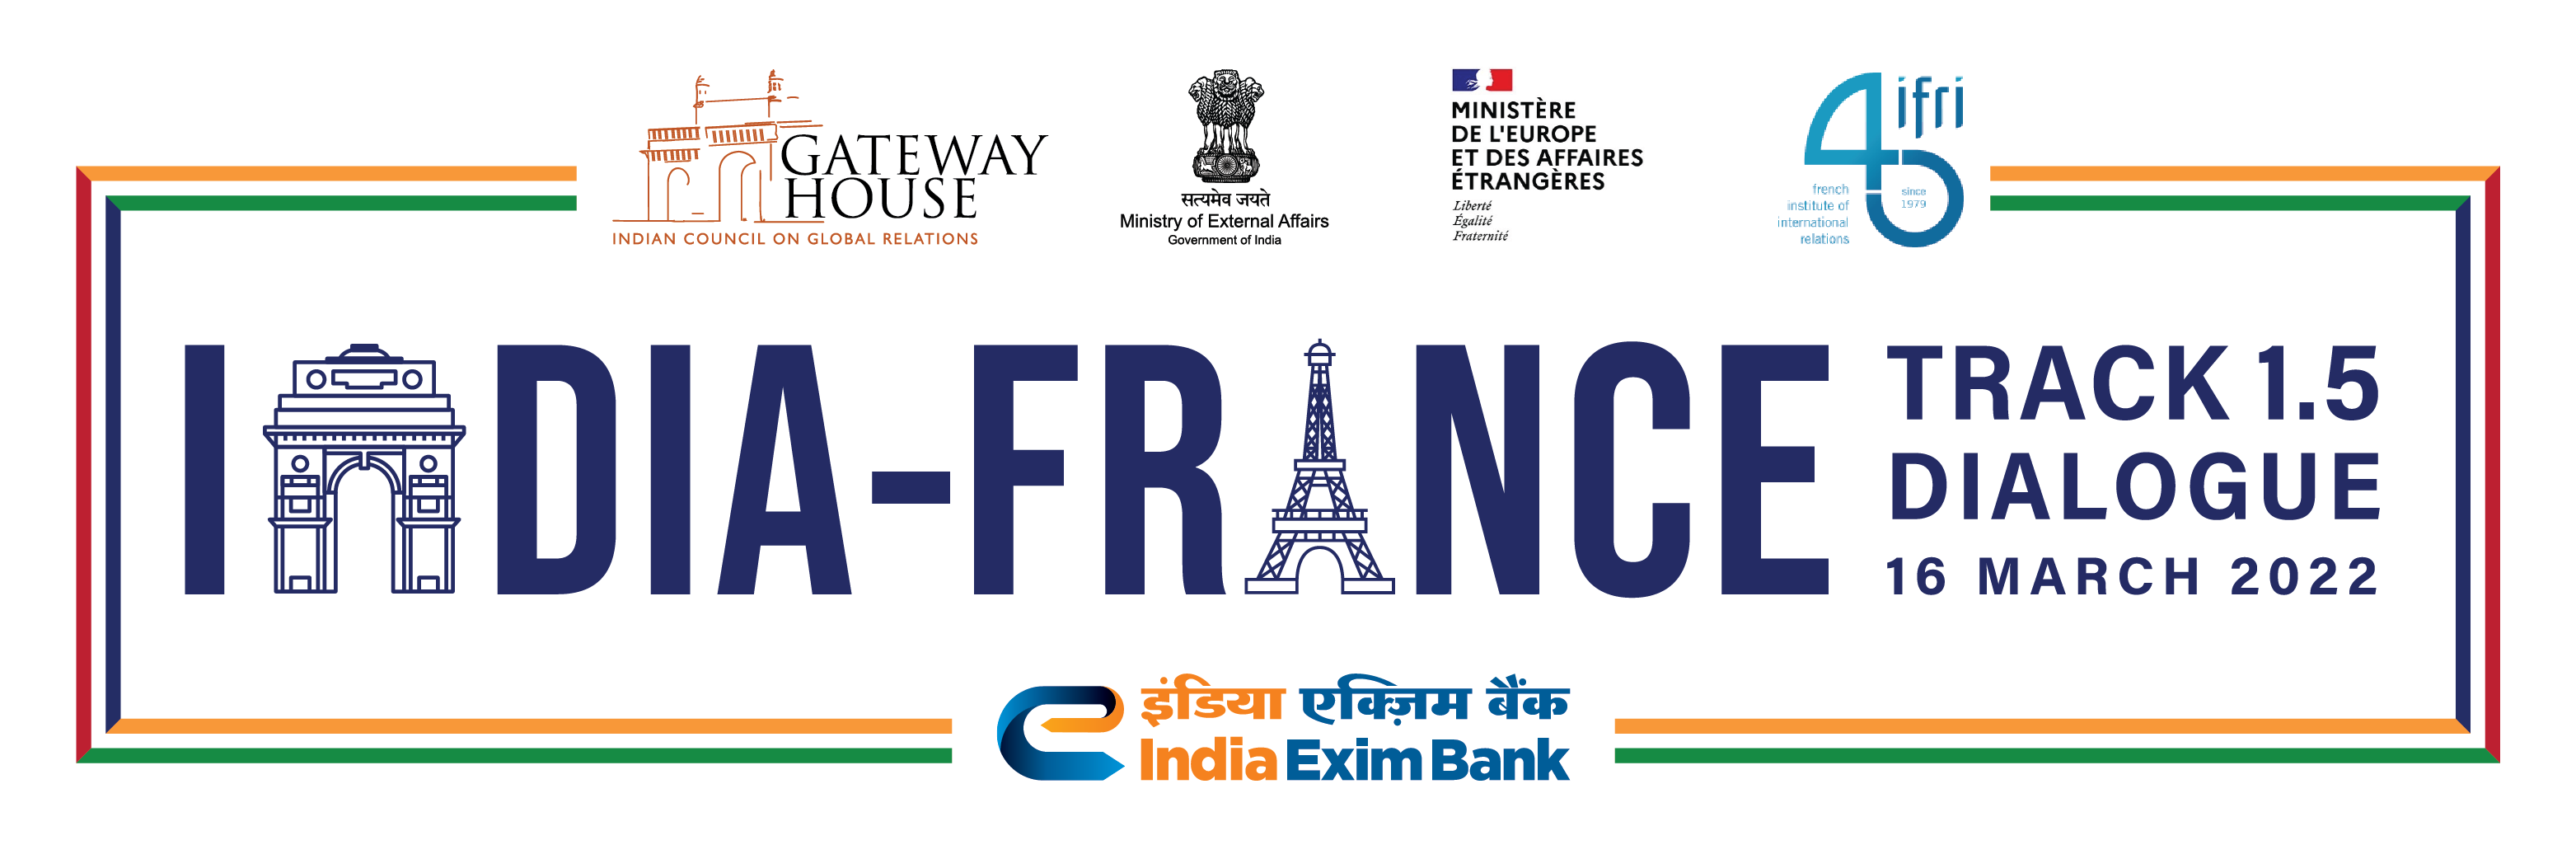 India-France-WebsiteBanner